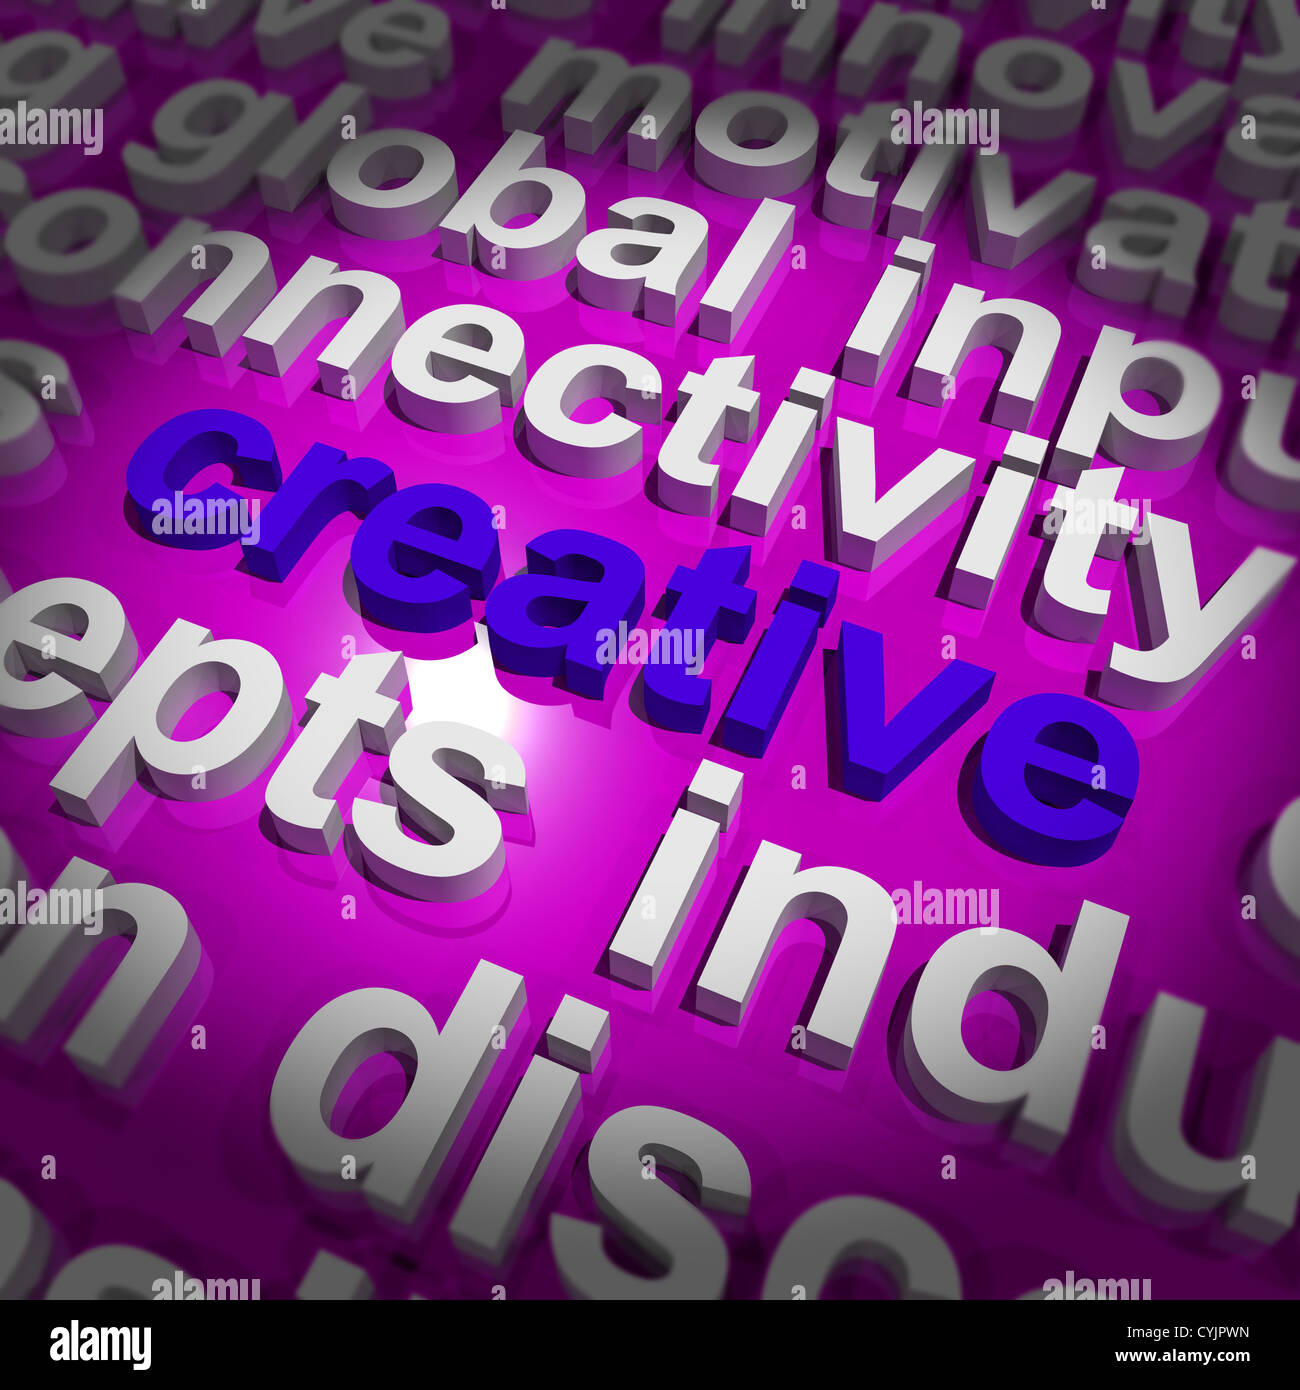 La palabra creativa que representan ideas innovadoras o imaginación Foto de stock